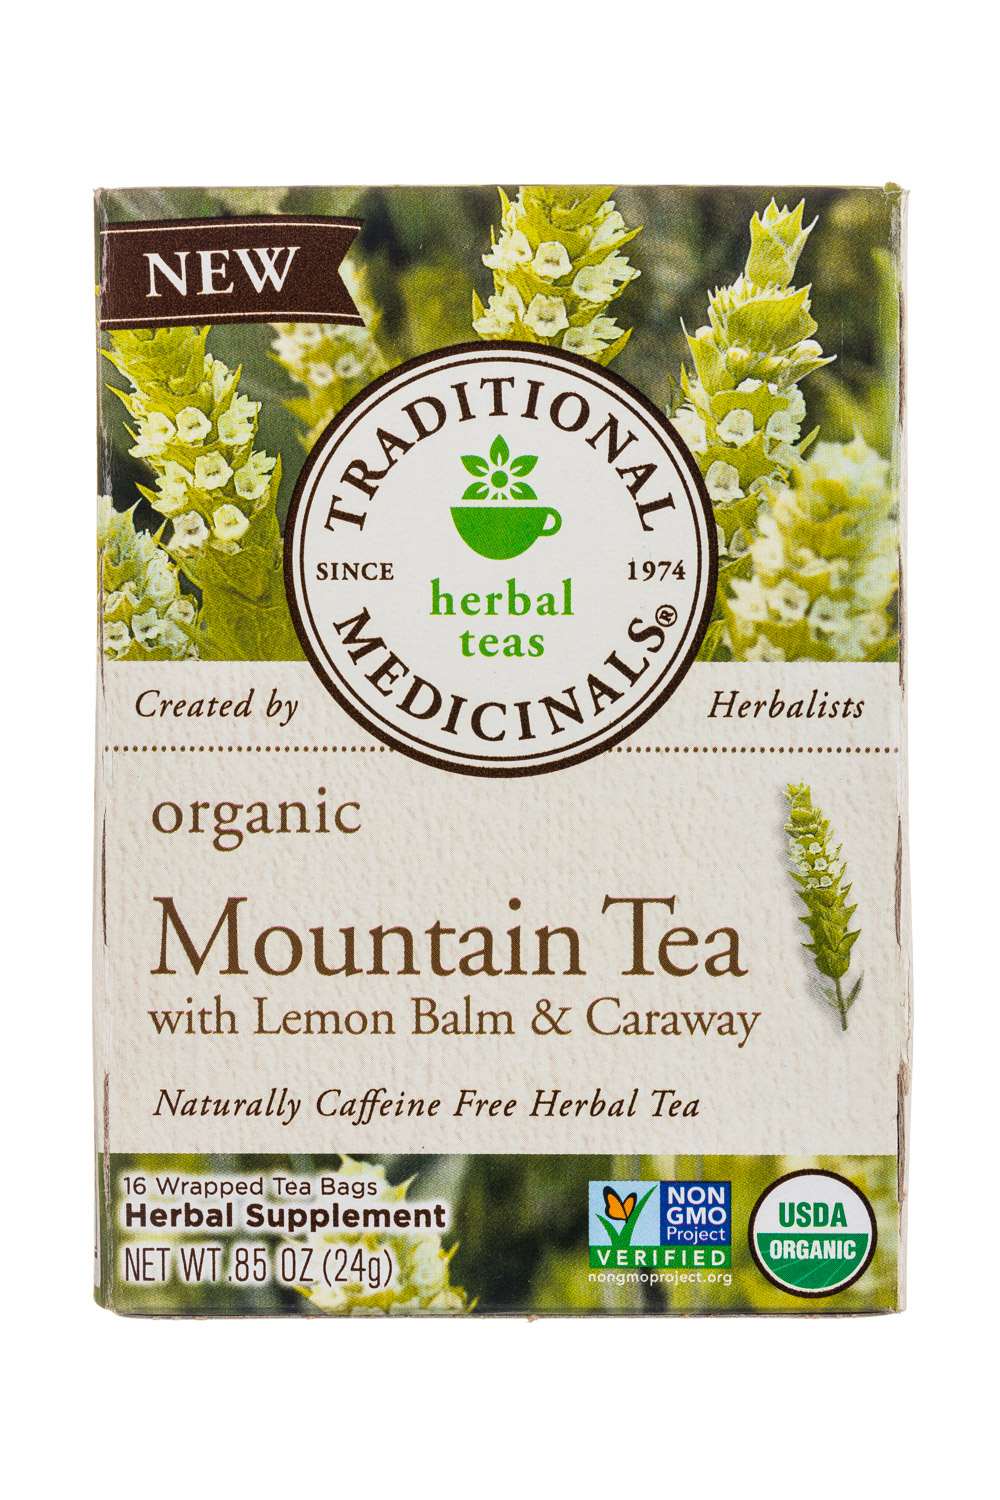 Mountain Tea